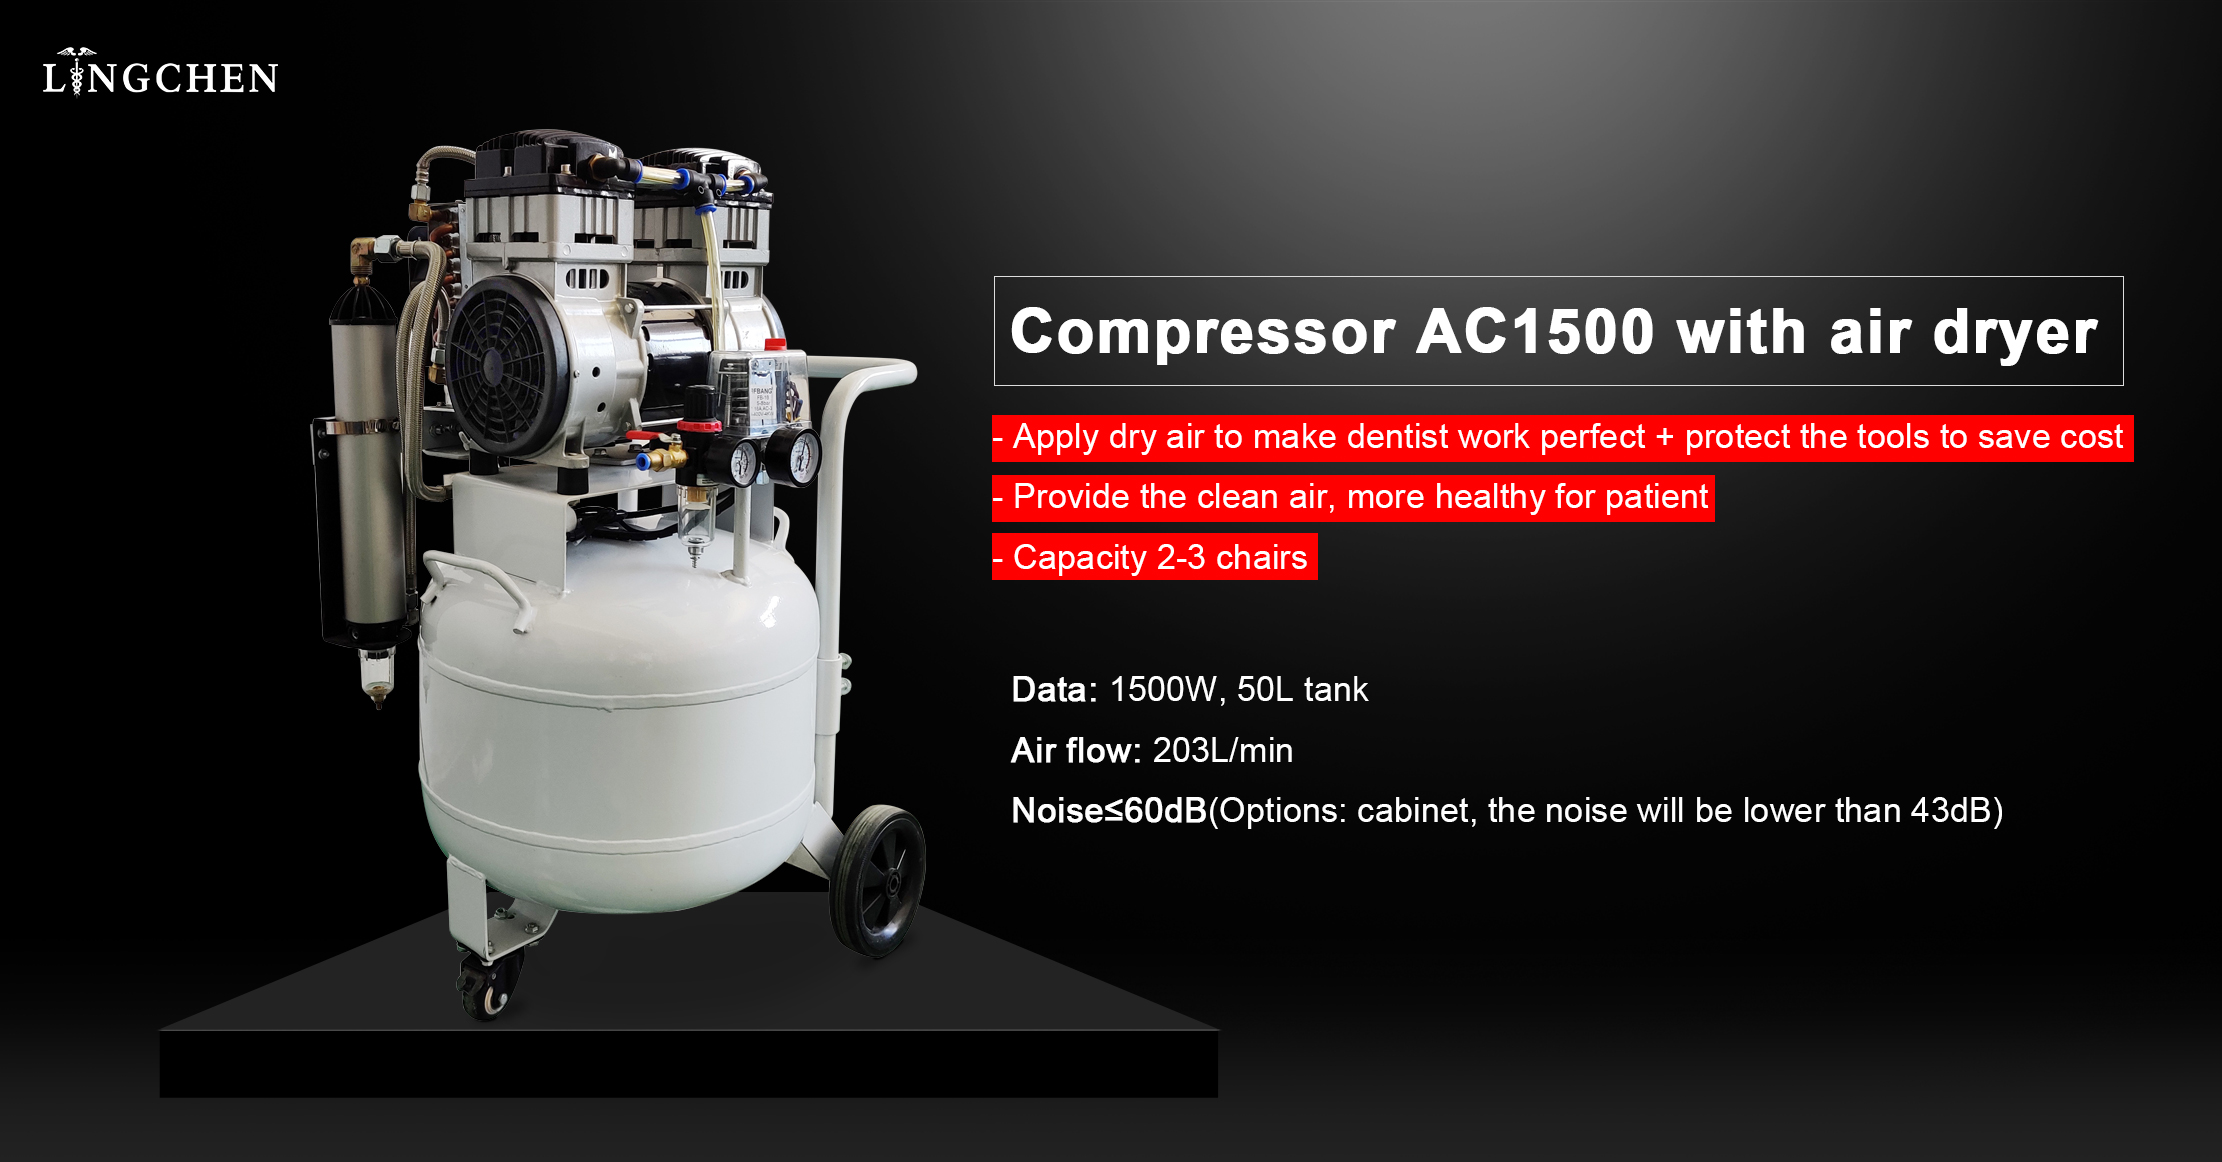 Silent Dental Compressor with Air-Dryer original design by Lingchen